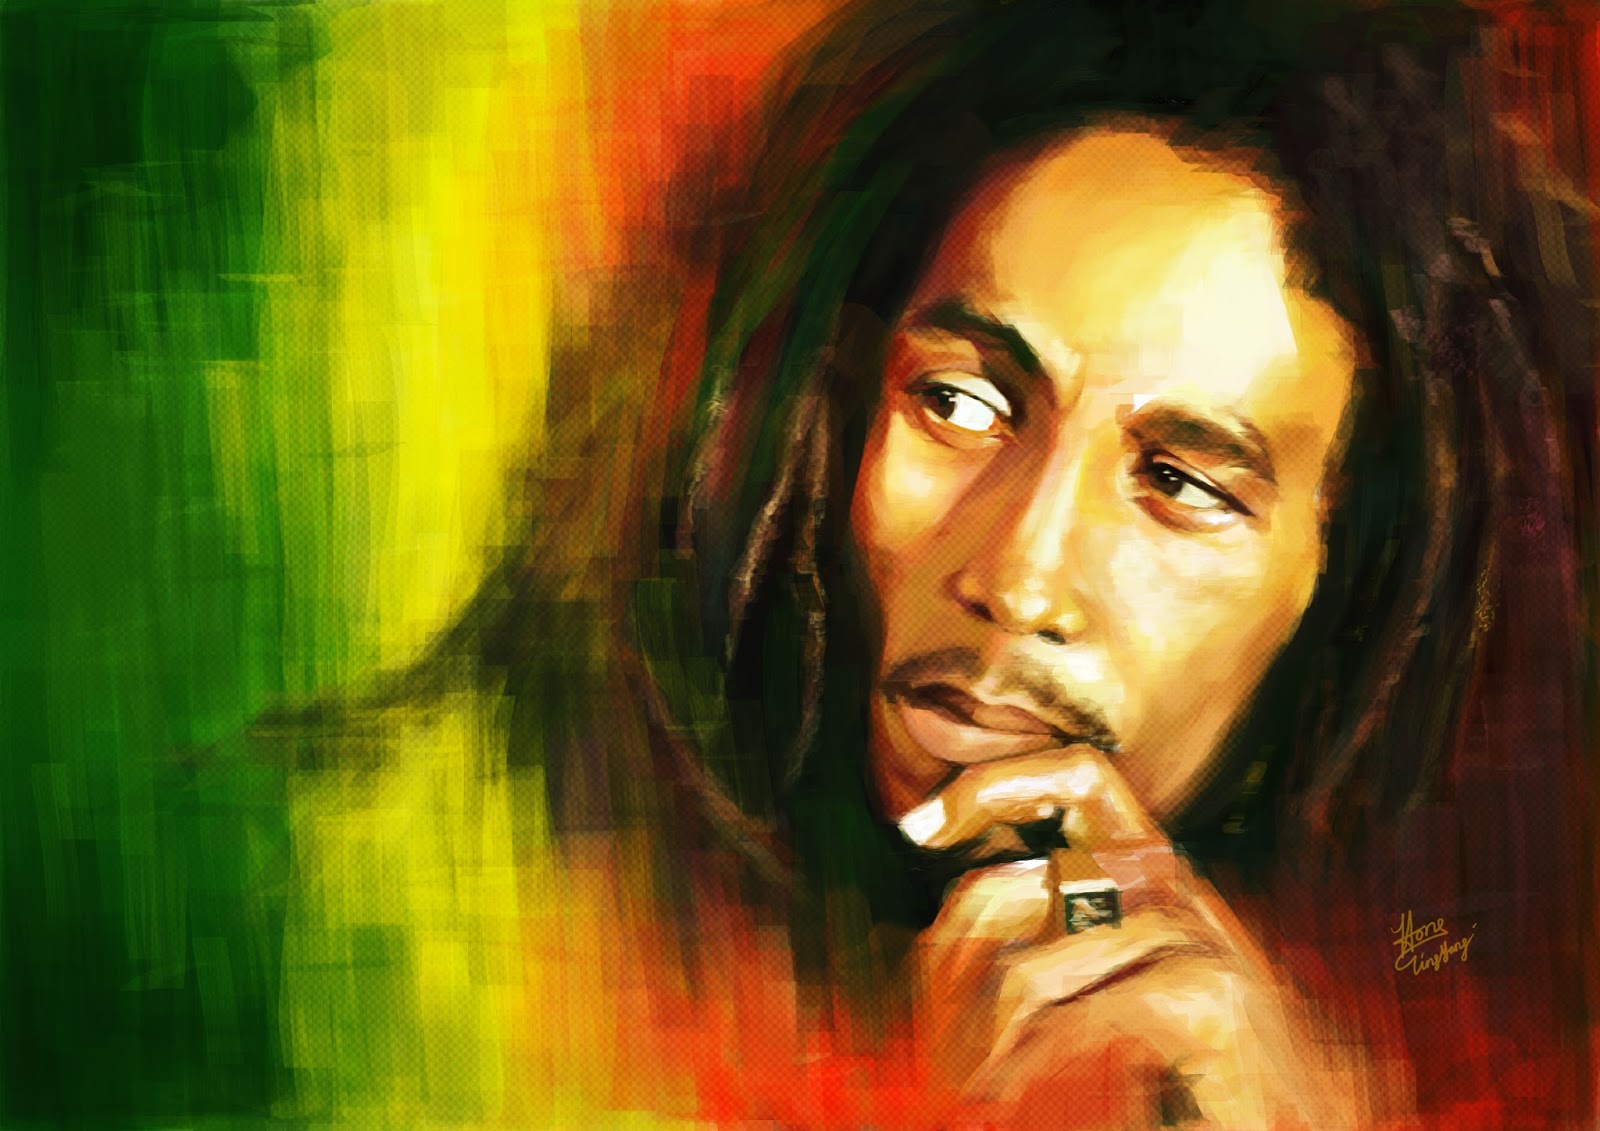 Bob Marley Palsukan Kematian, Ternyata Selama Ini Jadi Pengamen Jalanan